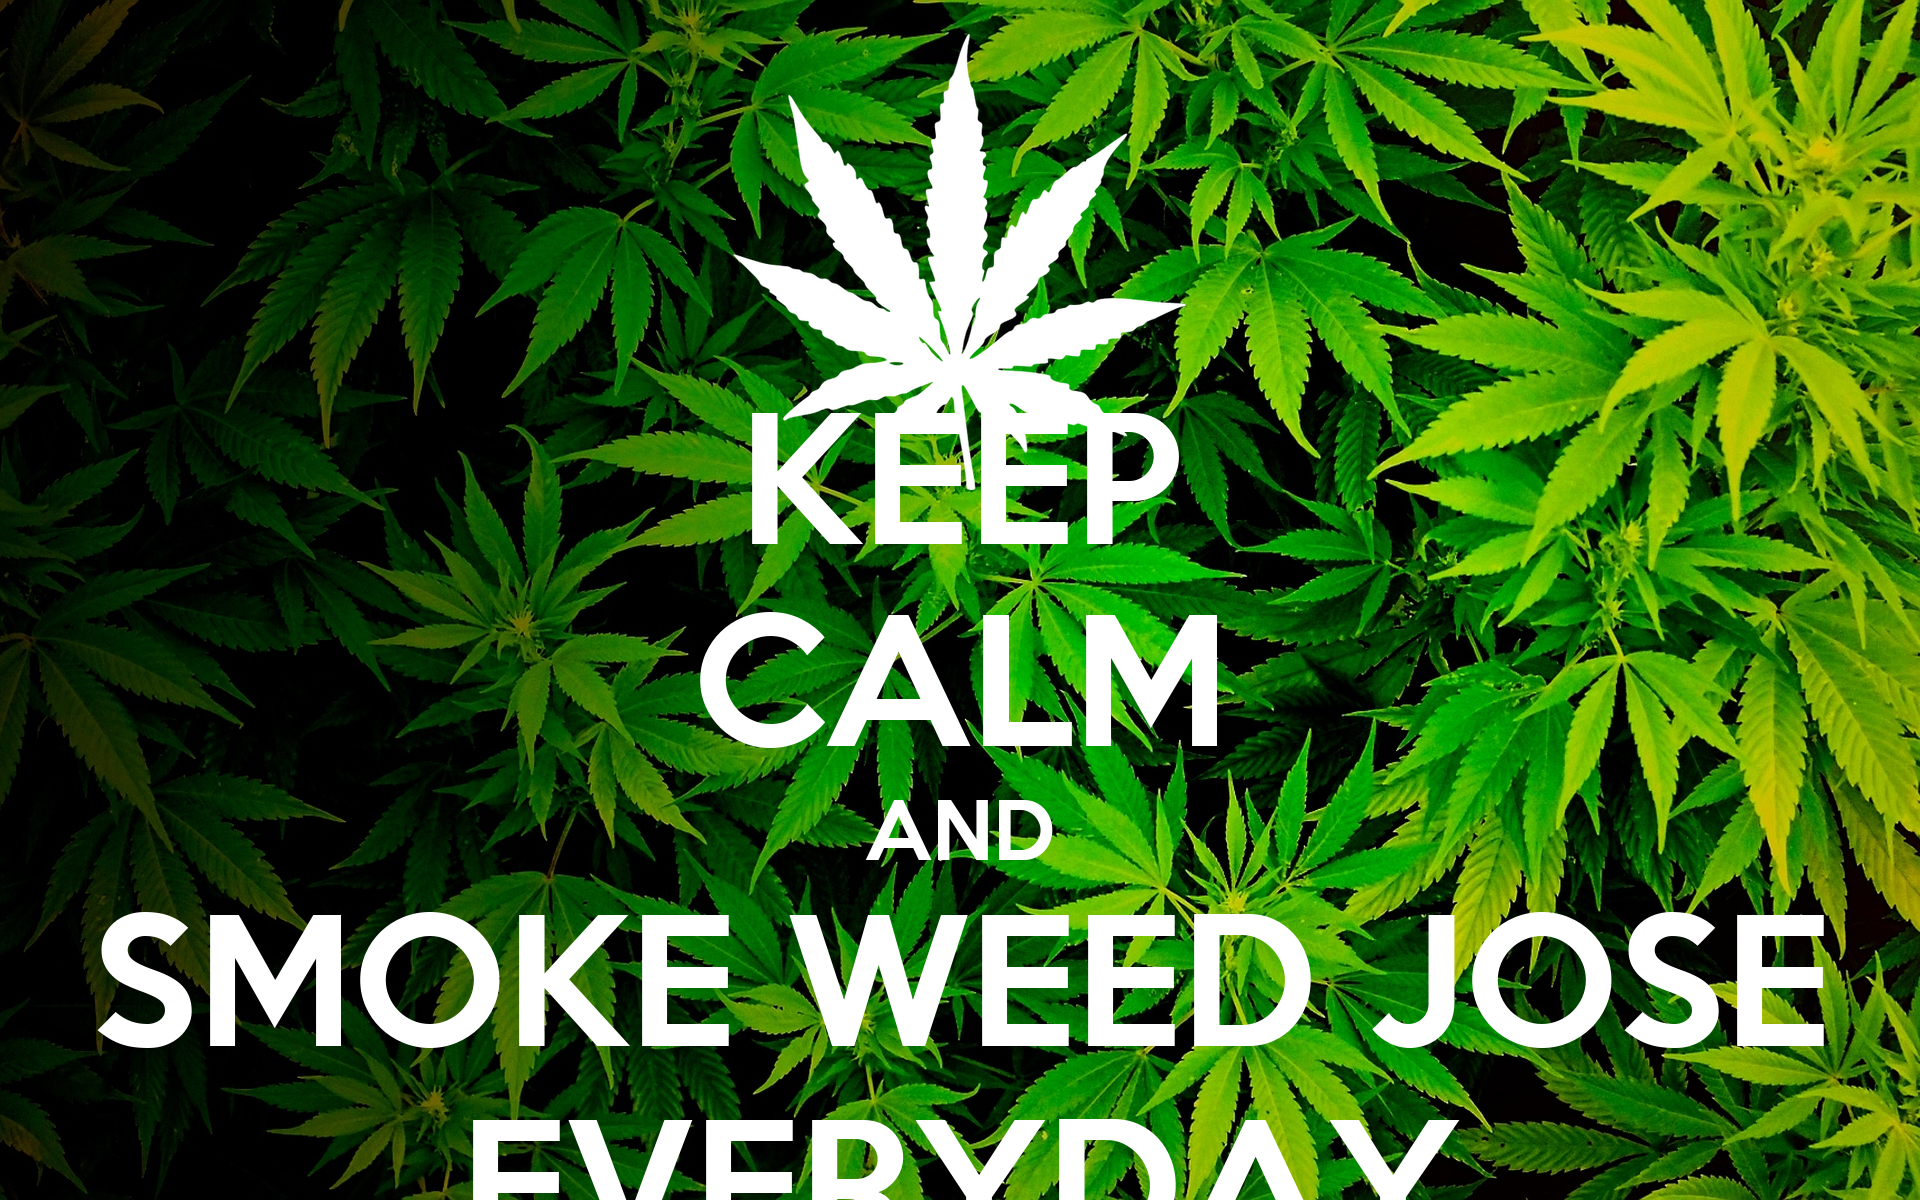 keep calm and smoke weed wallpaper